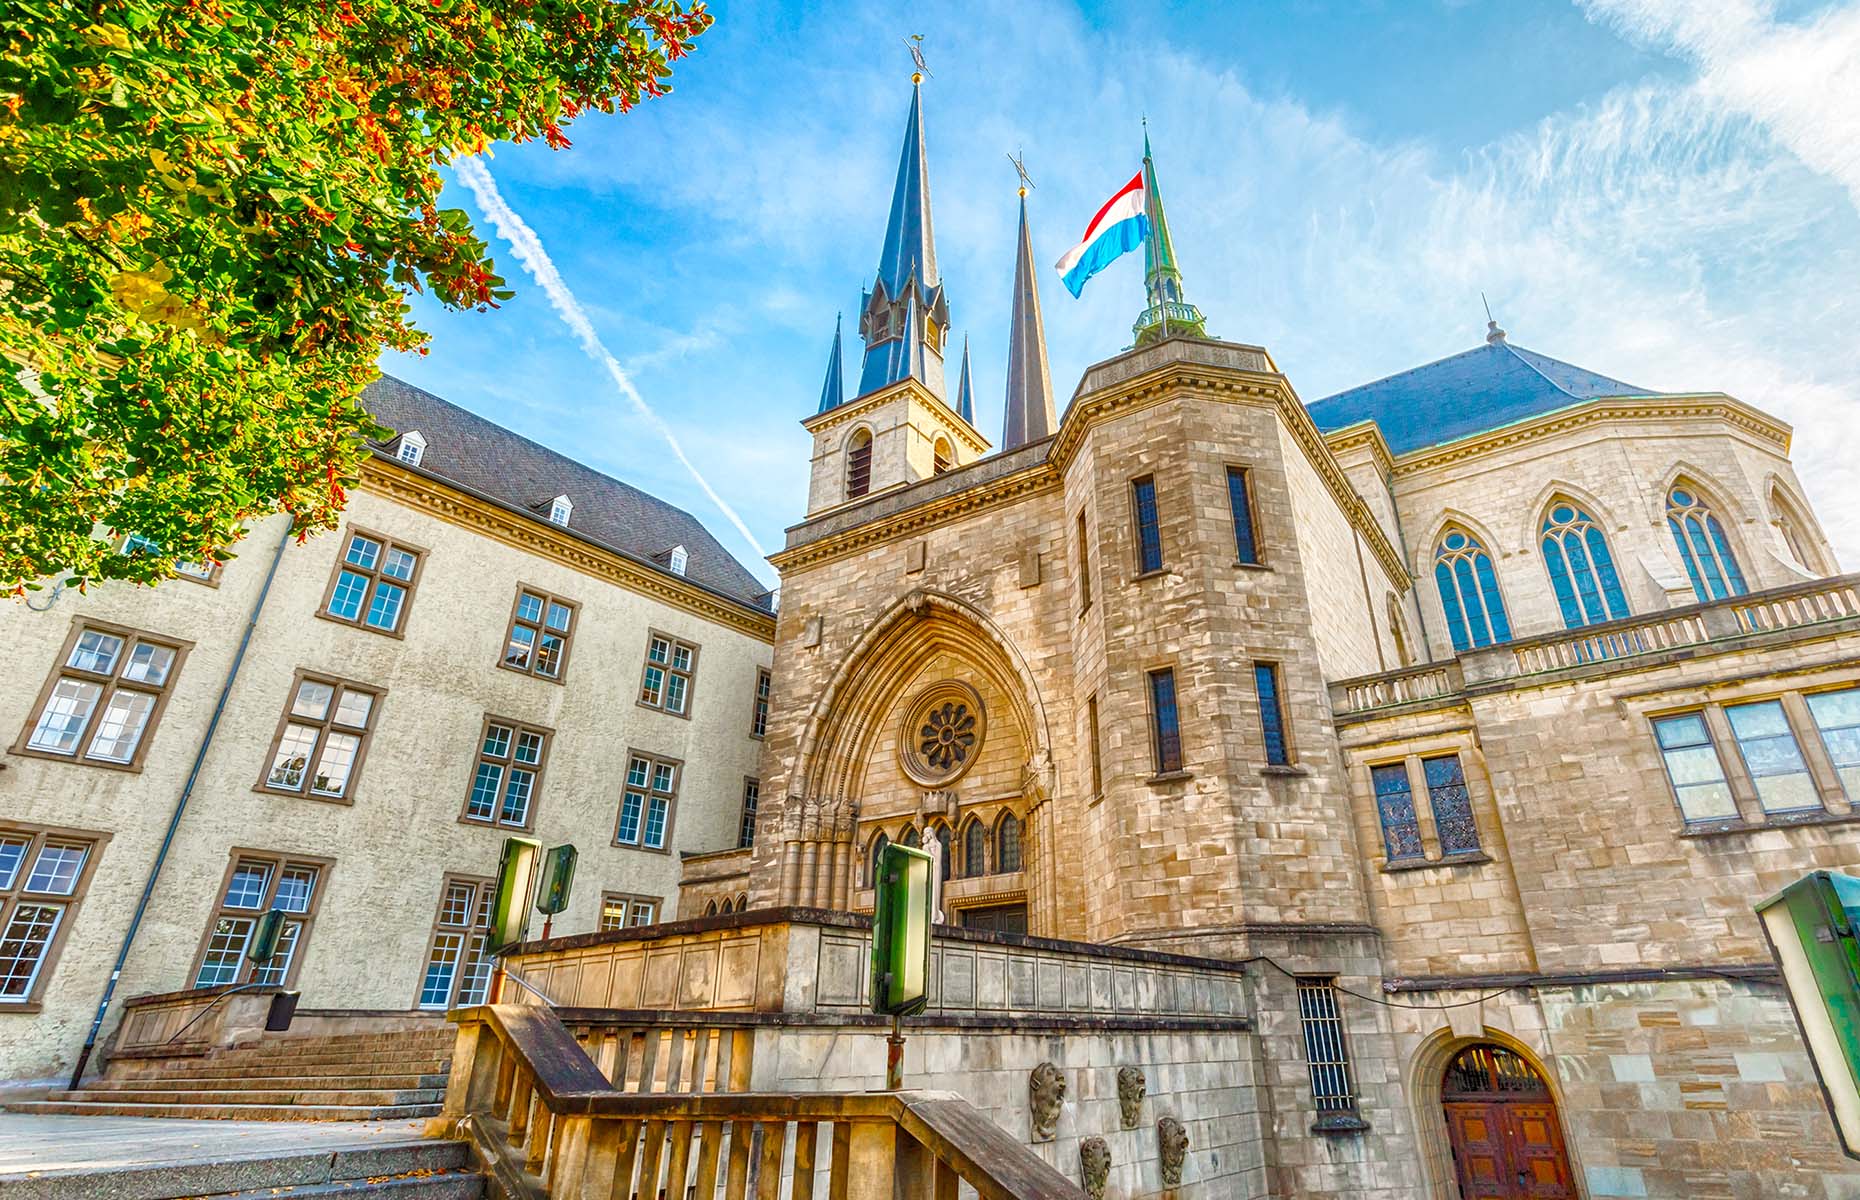 Cathedrale de Notre-Dame in Luxembourg (Image: BAHDANOVICH ALENA/Shutterstock)